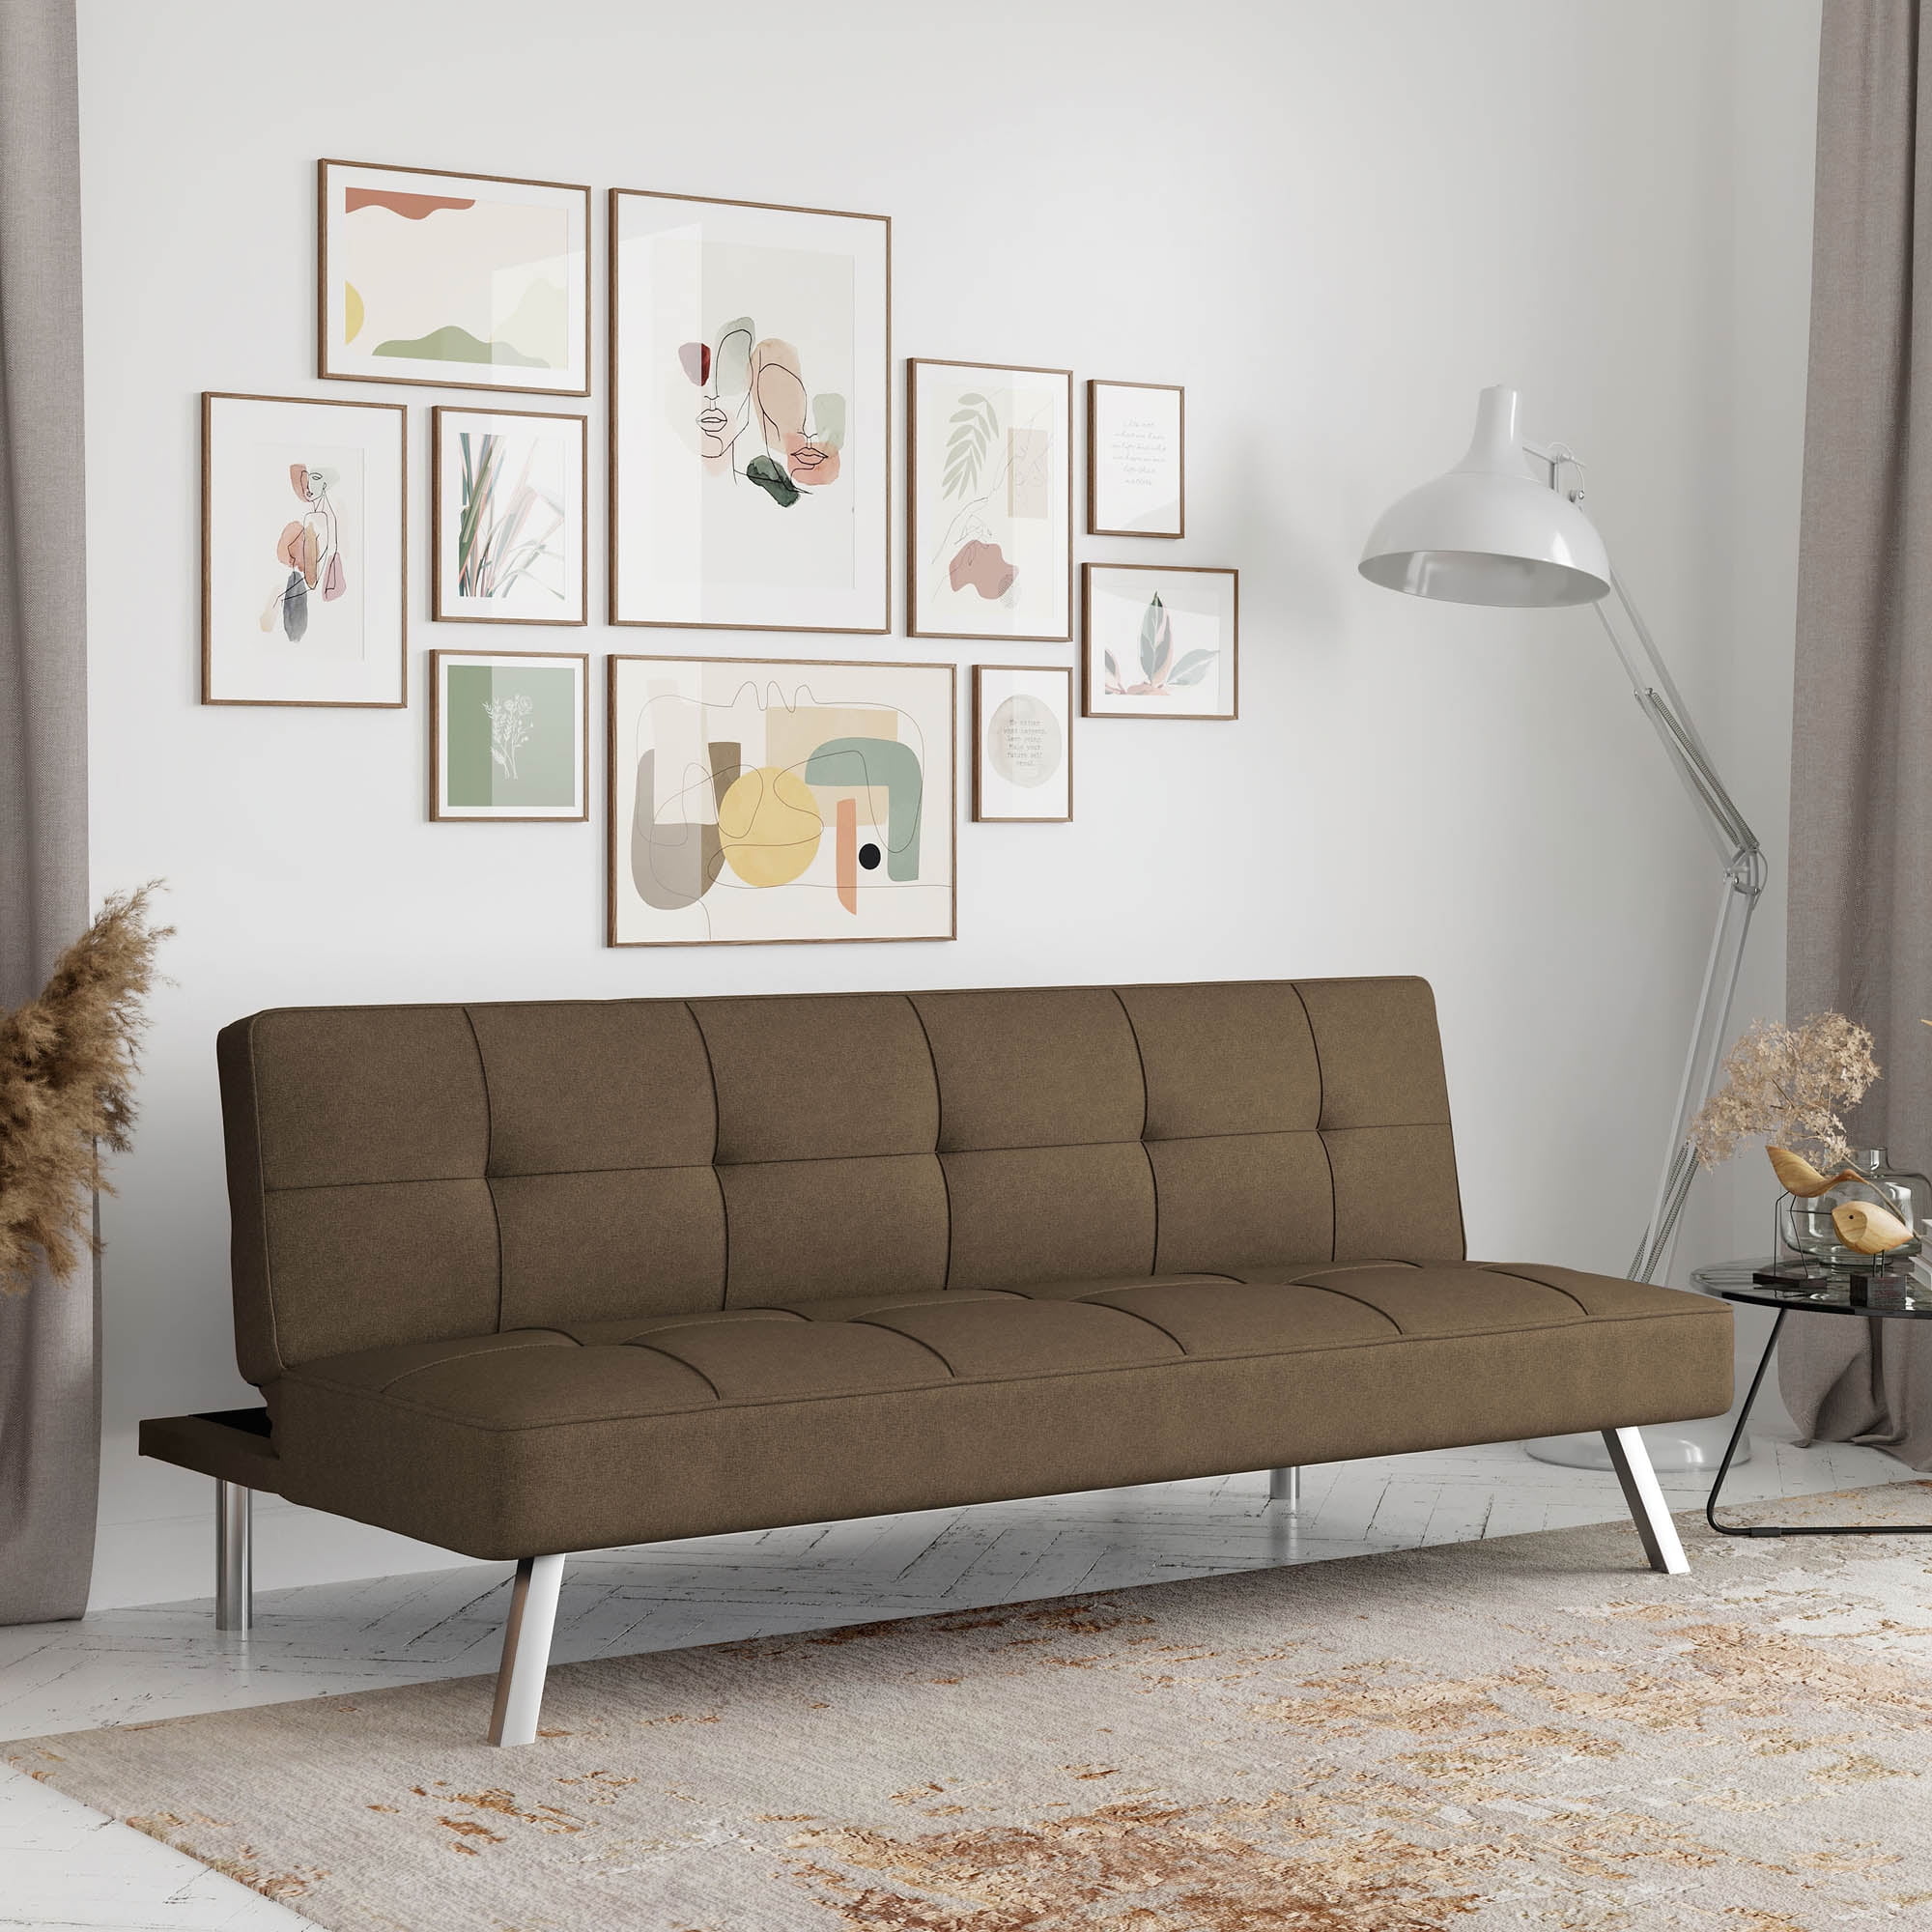 Futon Metal Frame Full Size Premium Sofa Sleeper Black Dorm Guest Couch Brandnew 